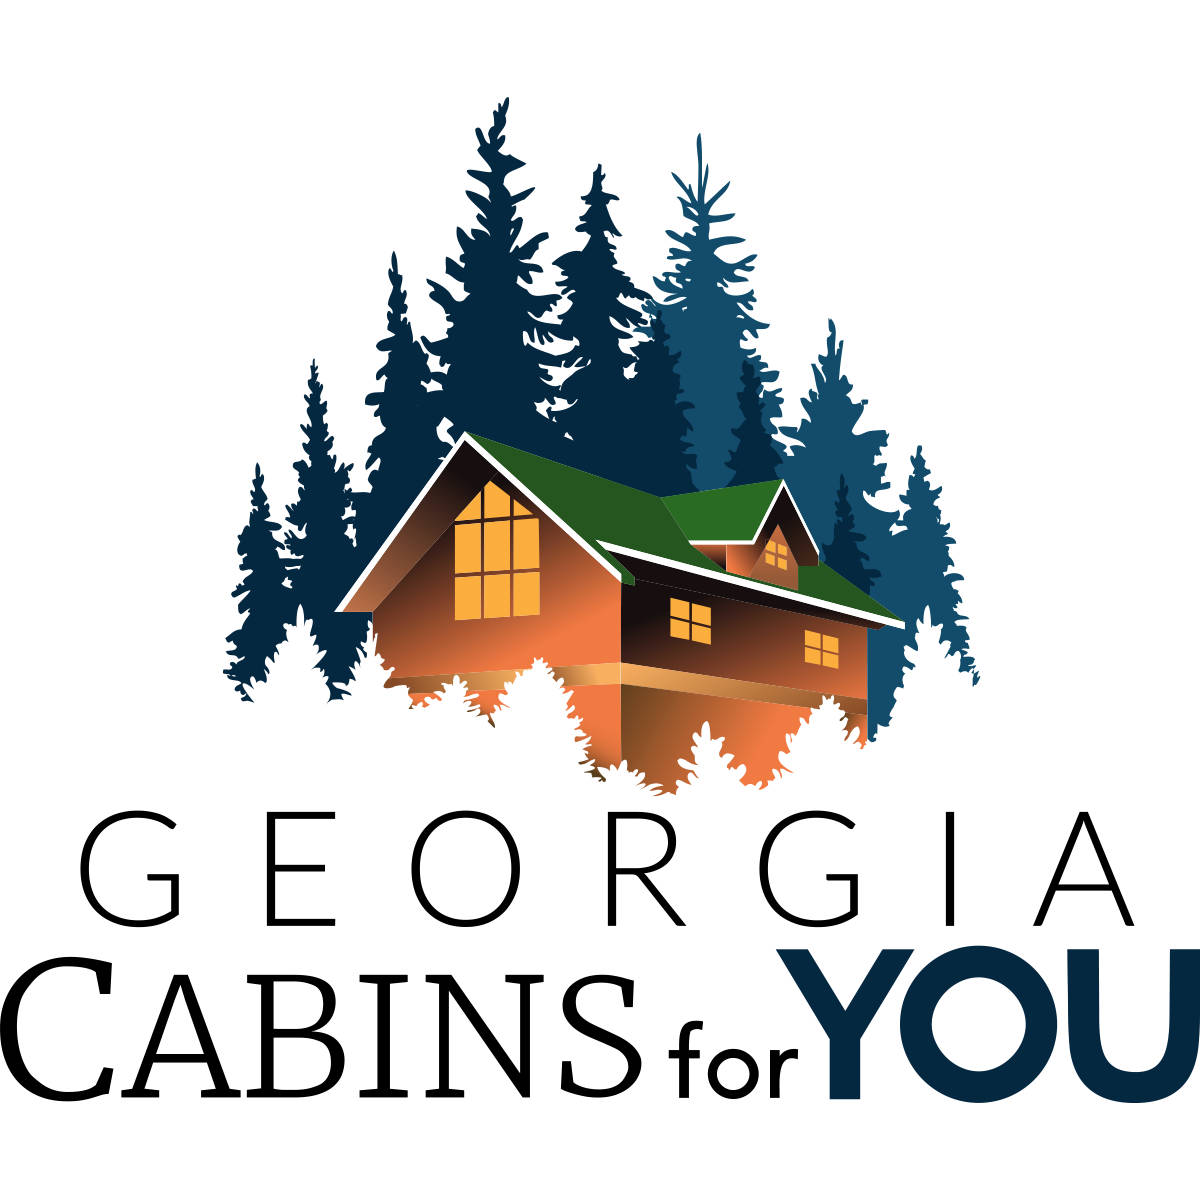 Cabins for You - Georgia